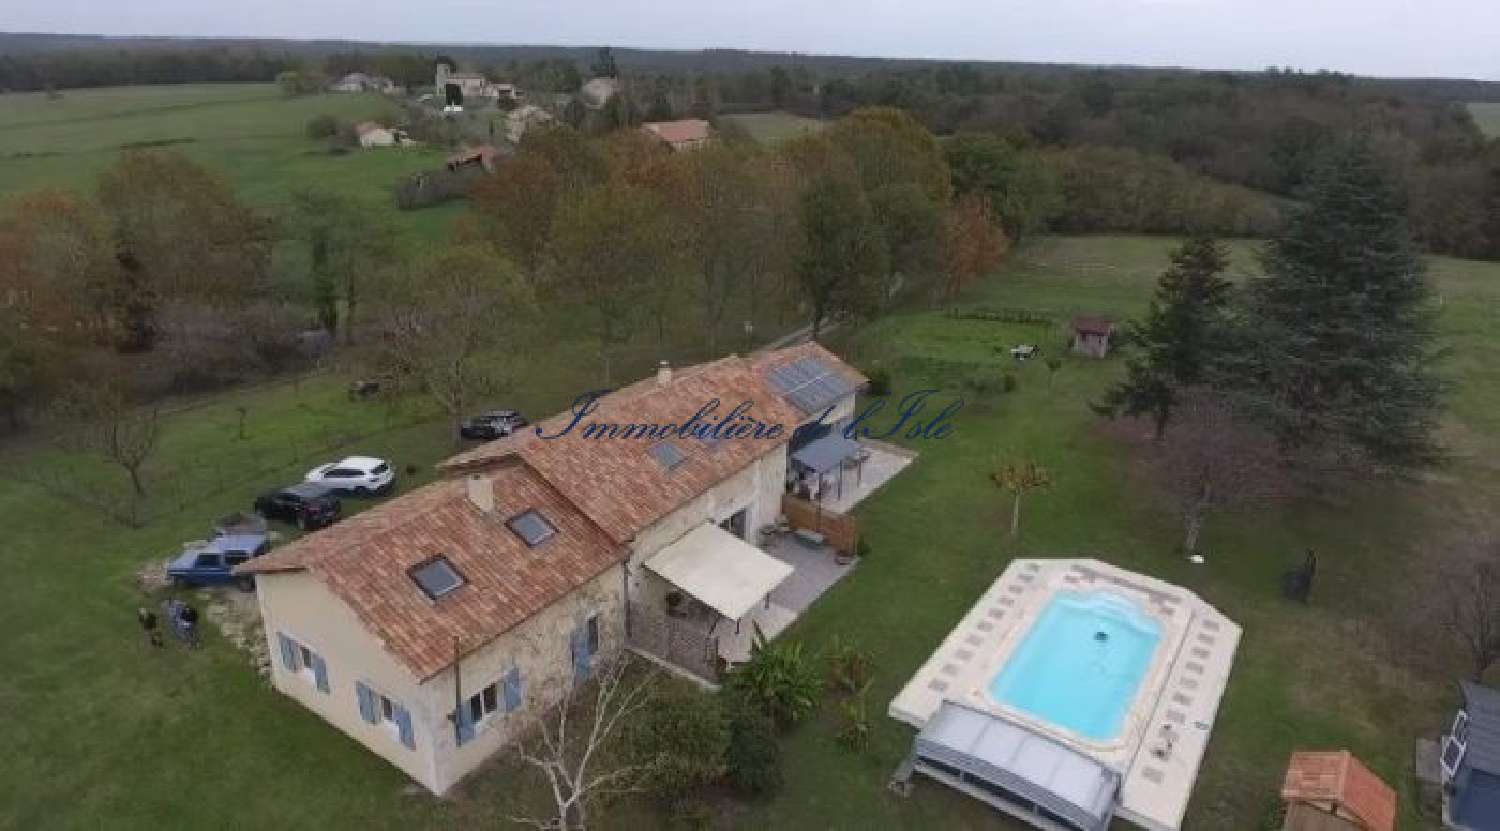  à vendre maison Servanches Dordogne 3